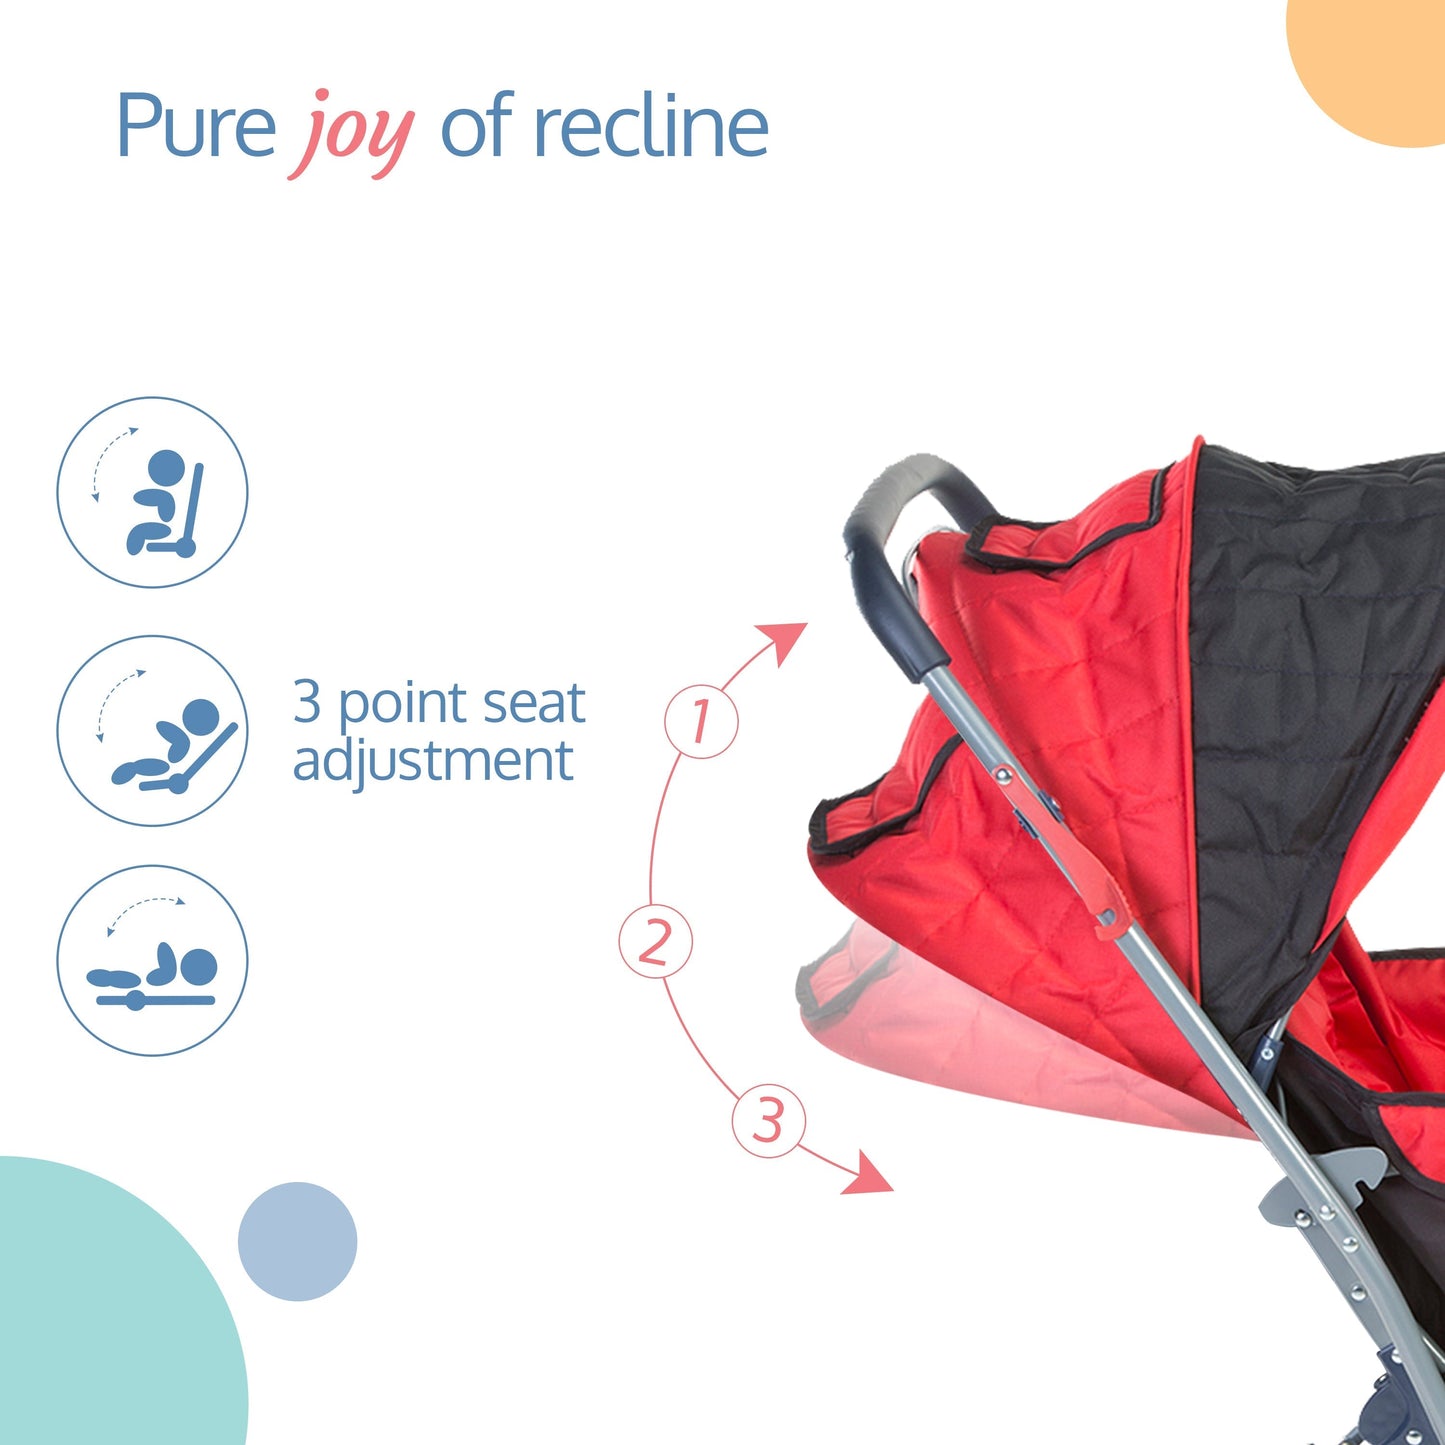 Starshine Baby Stroller/Pram for 0 to 3 Years, New Born/Toddler/Kid, Lightweight, Adjustable backrest, 360° Swivel Wheel, Large Storage Basket, Reversible Handlebar (Red)